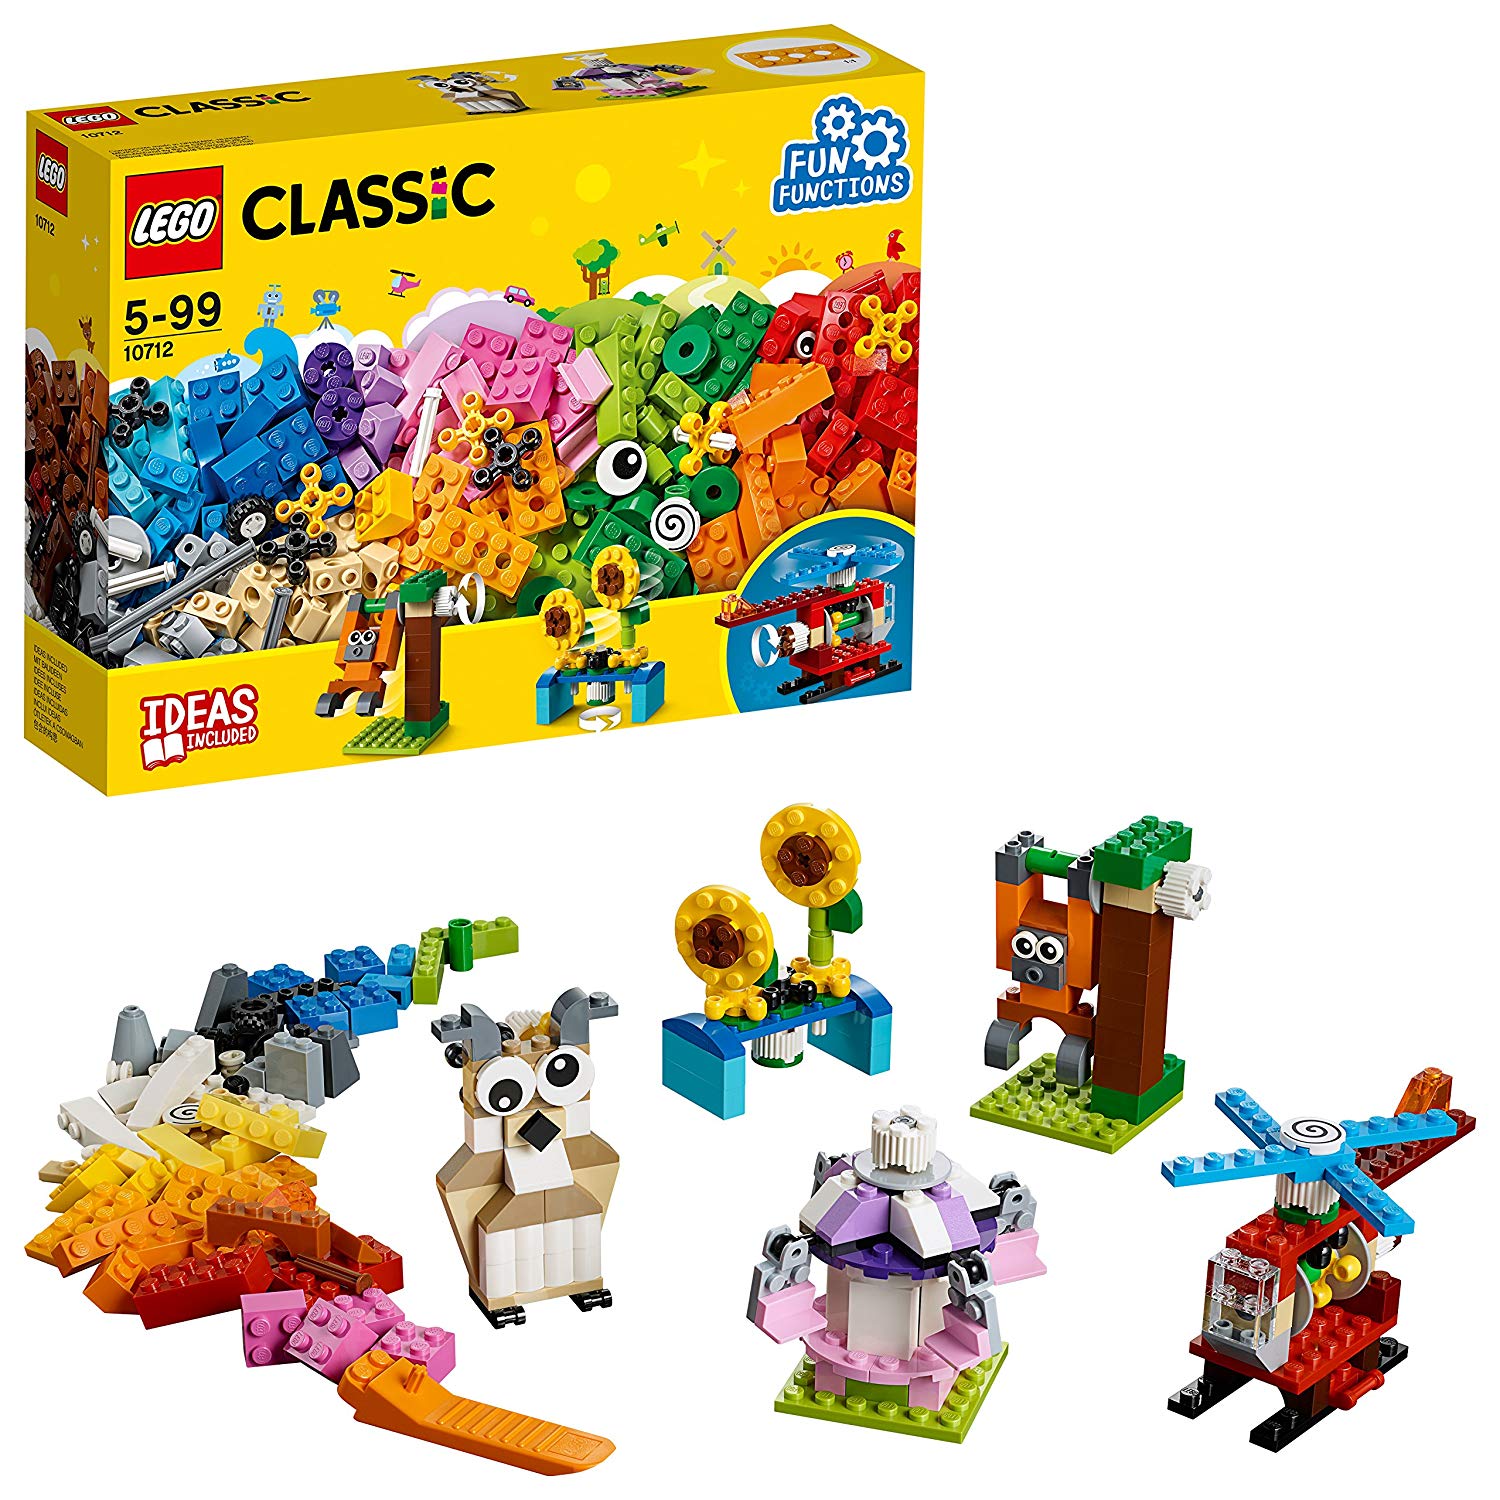 LEGO Classic Brick Set Gears Colourful